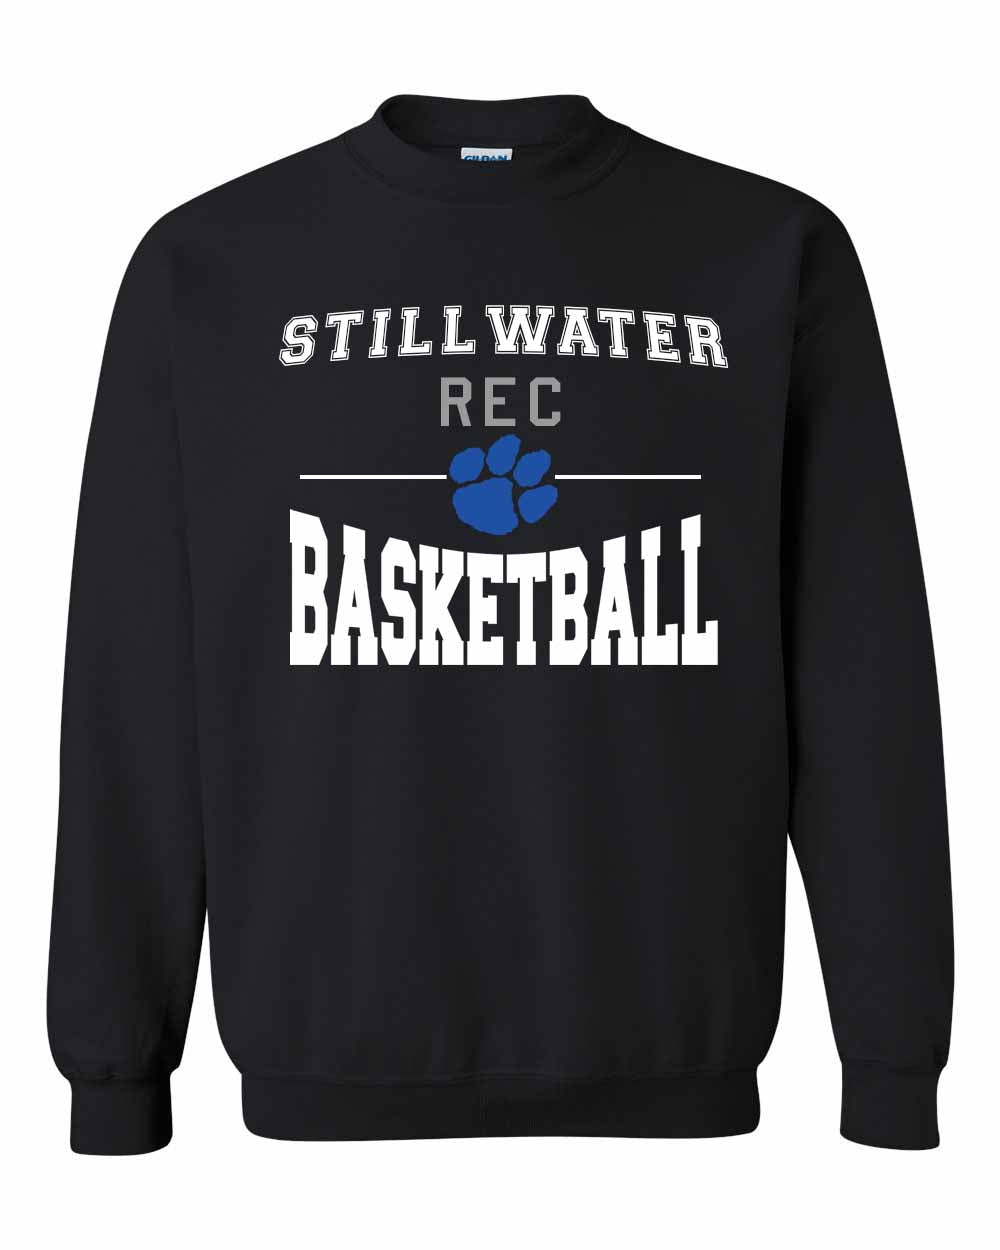 Stillwater Basketball non hooded sweatshirt